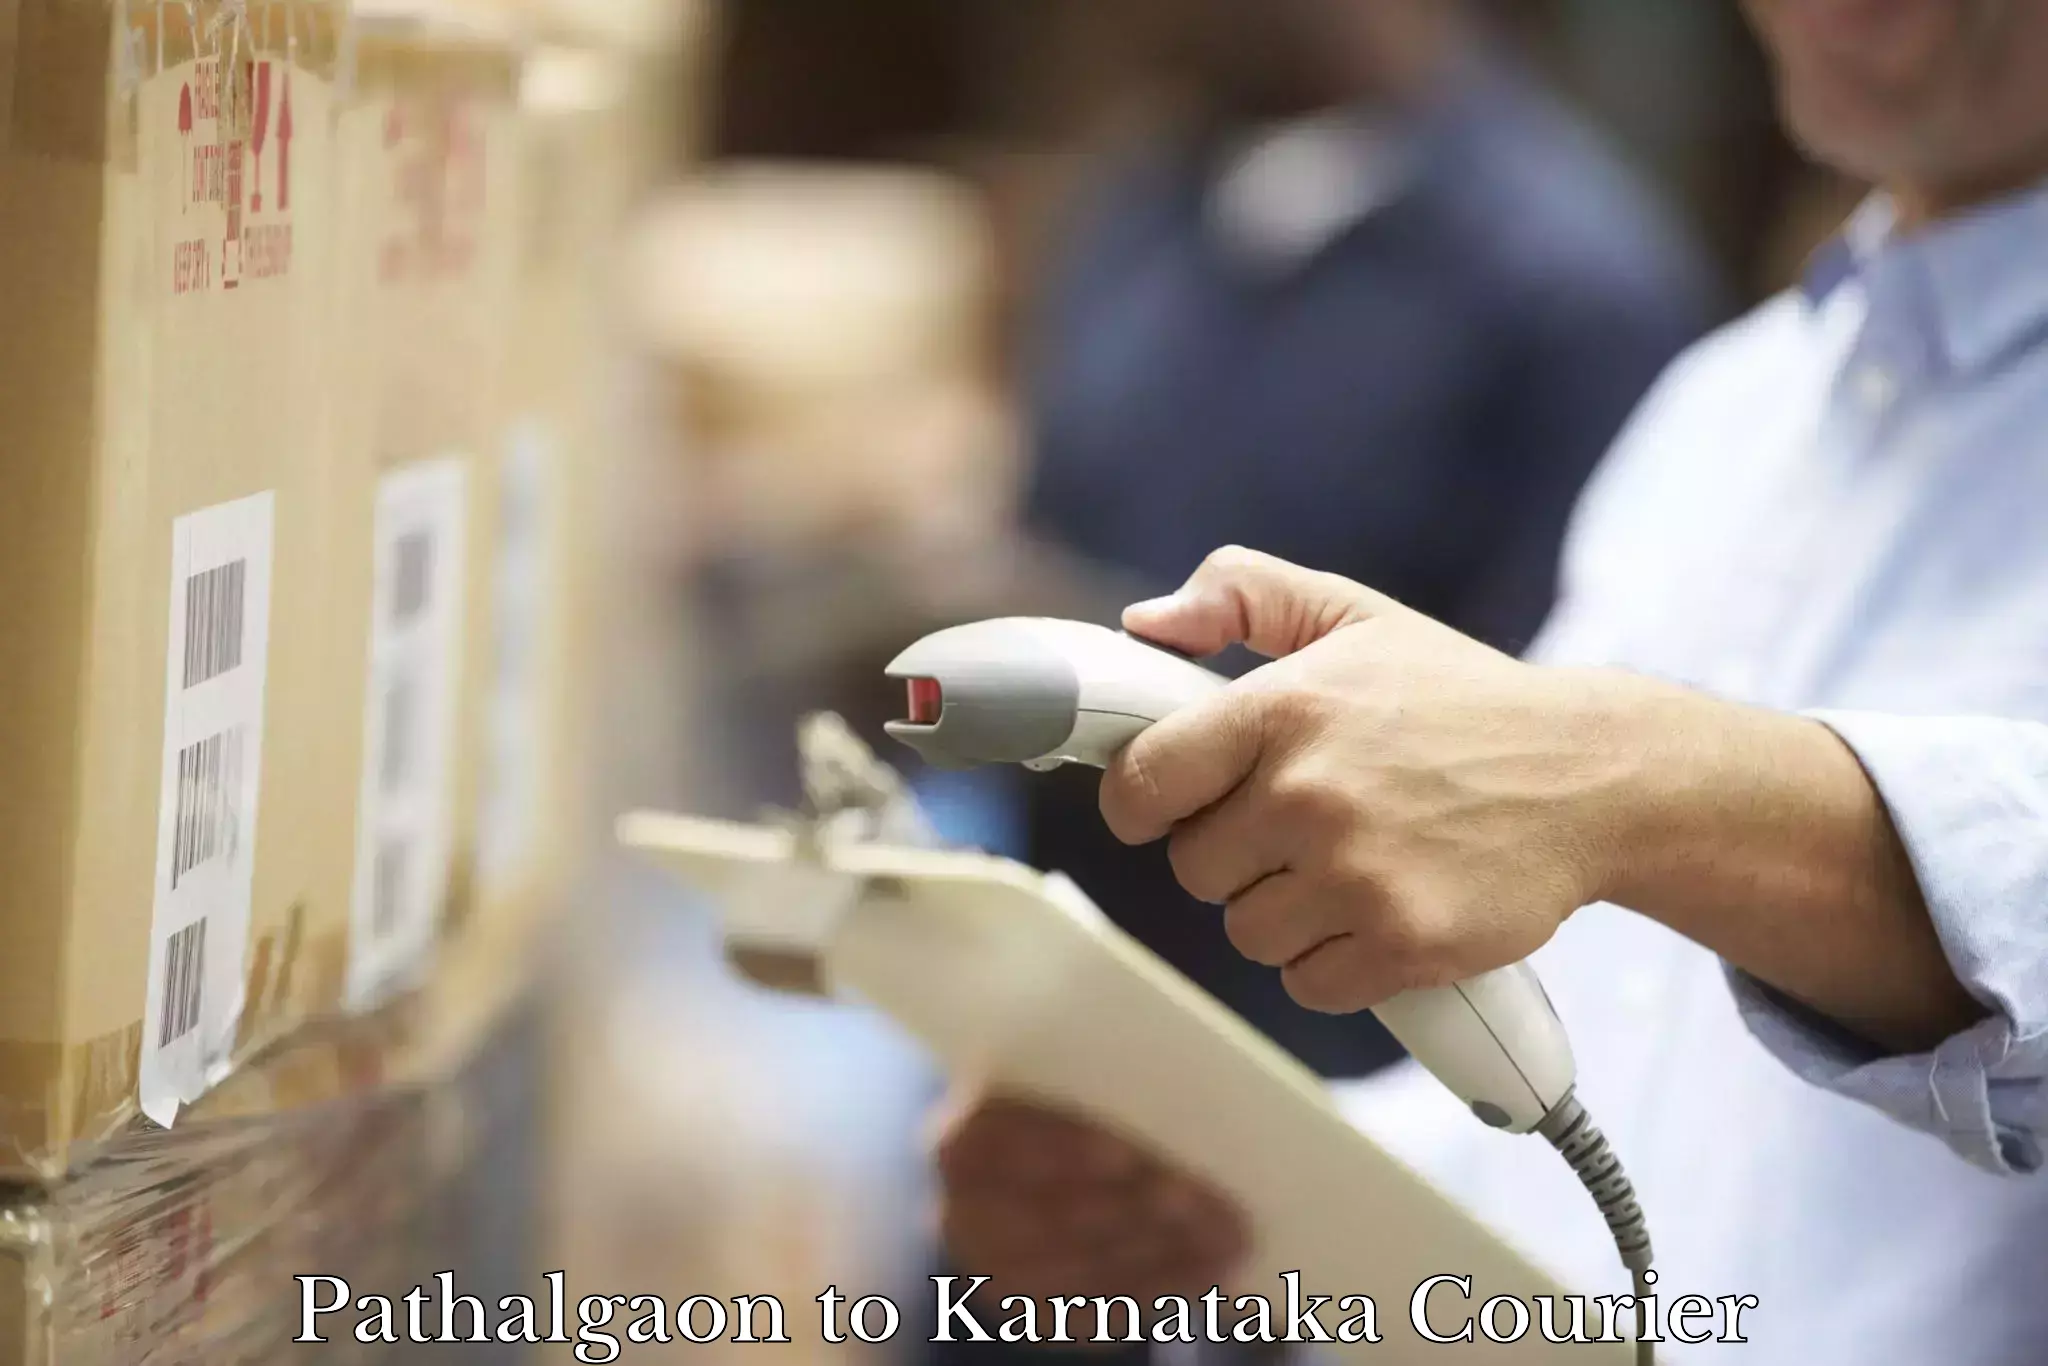 Professional courier handling Pathalgaon to Bengaluru